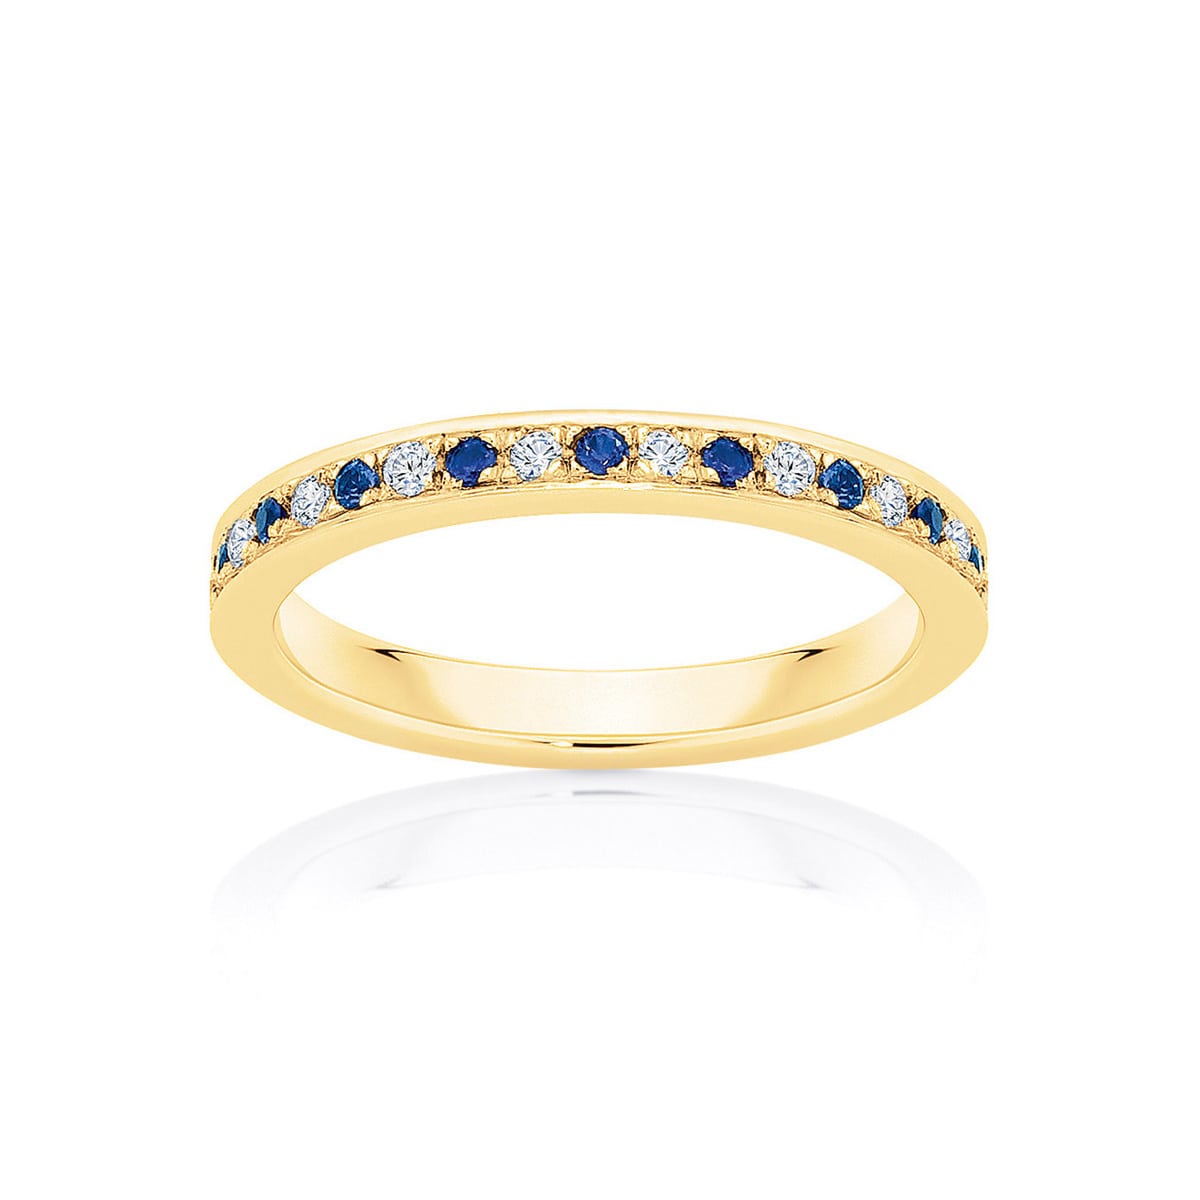 Womens Diamond and Sapphire Wedding Ring in Yellow Gold | Santorini